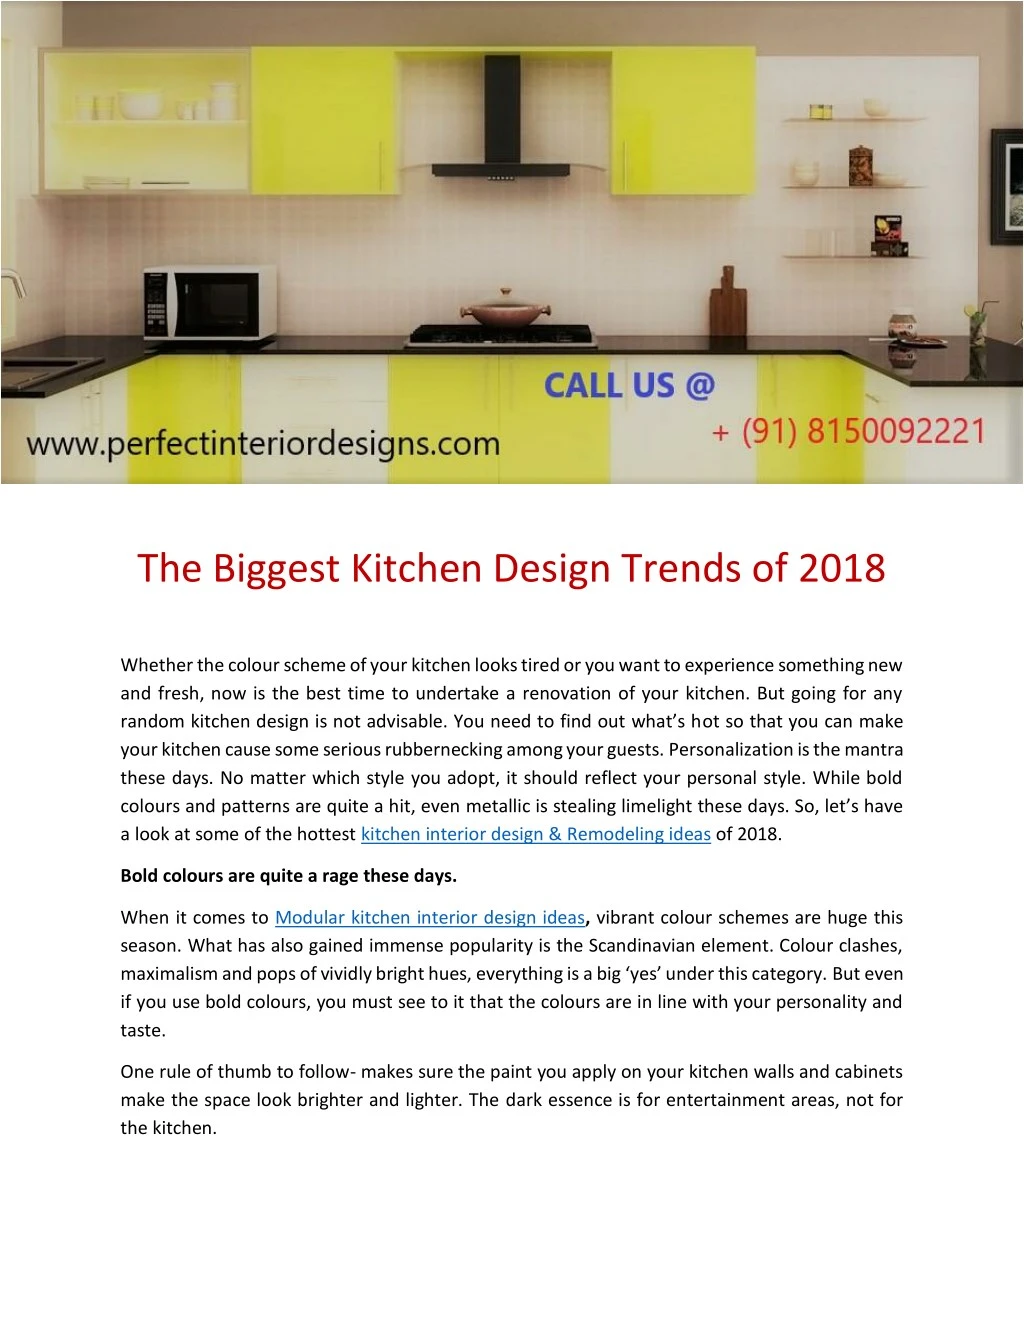 the biggest kitchen design trends of 2018